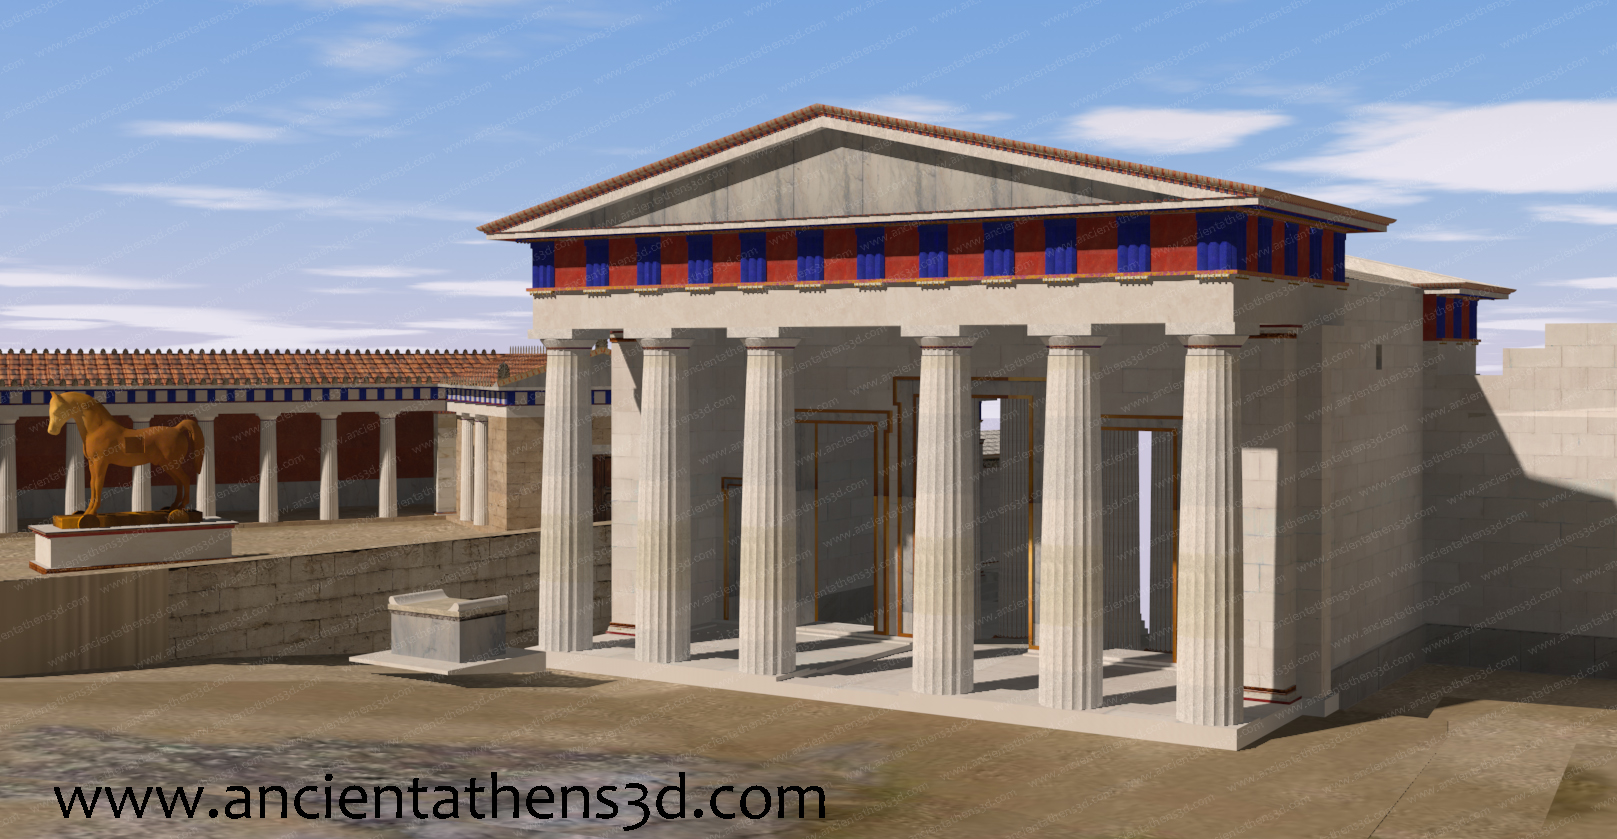 Classical Acropolis of Athens - Ancient Athens 3d